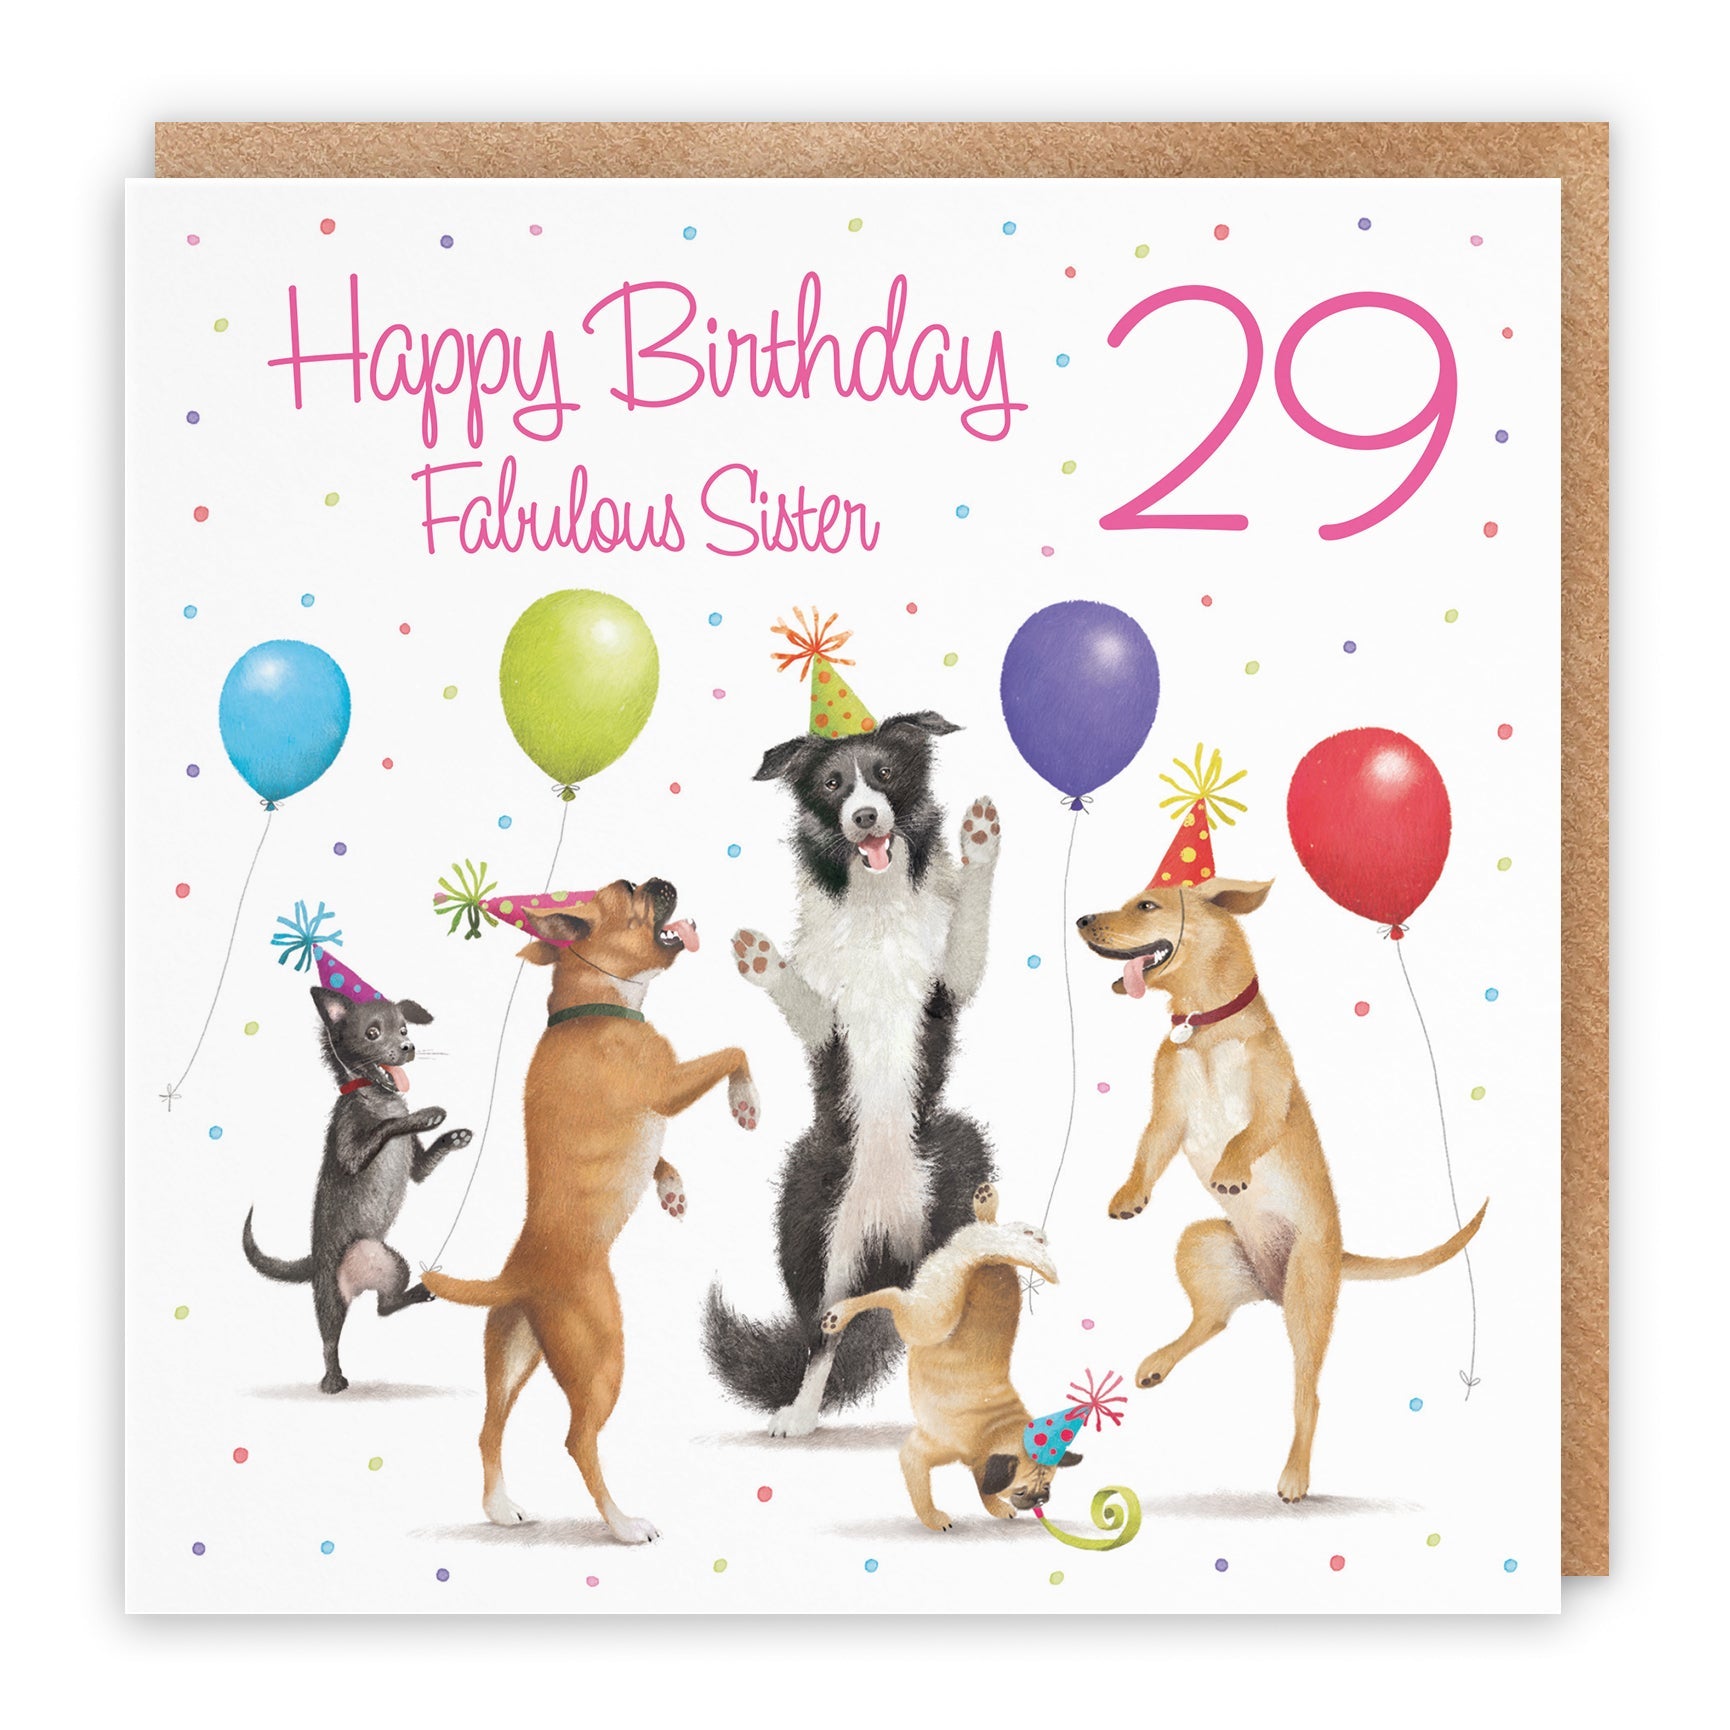 29th Birthday Cards - Age 29